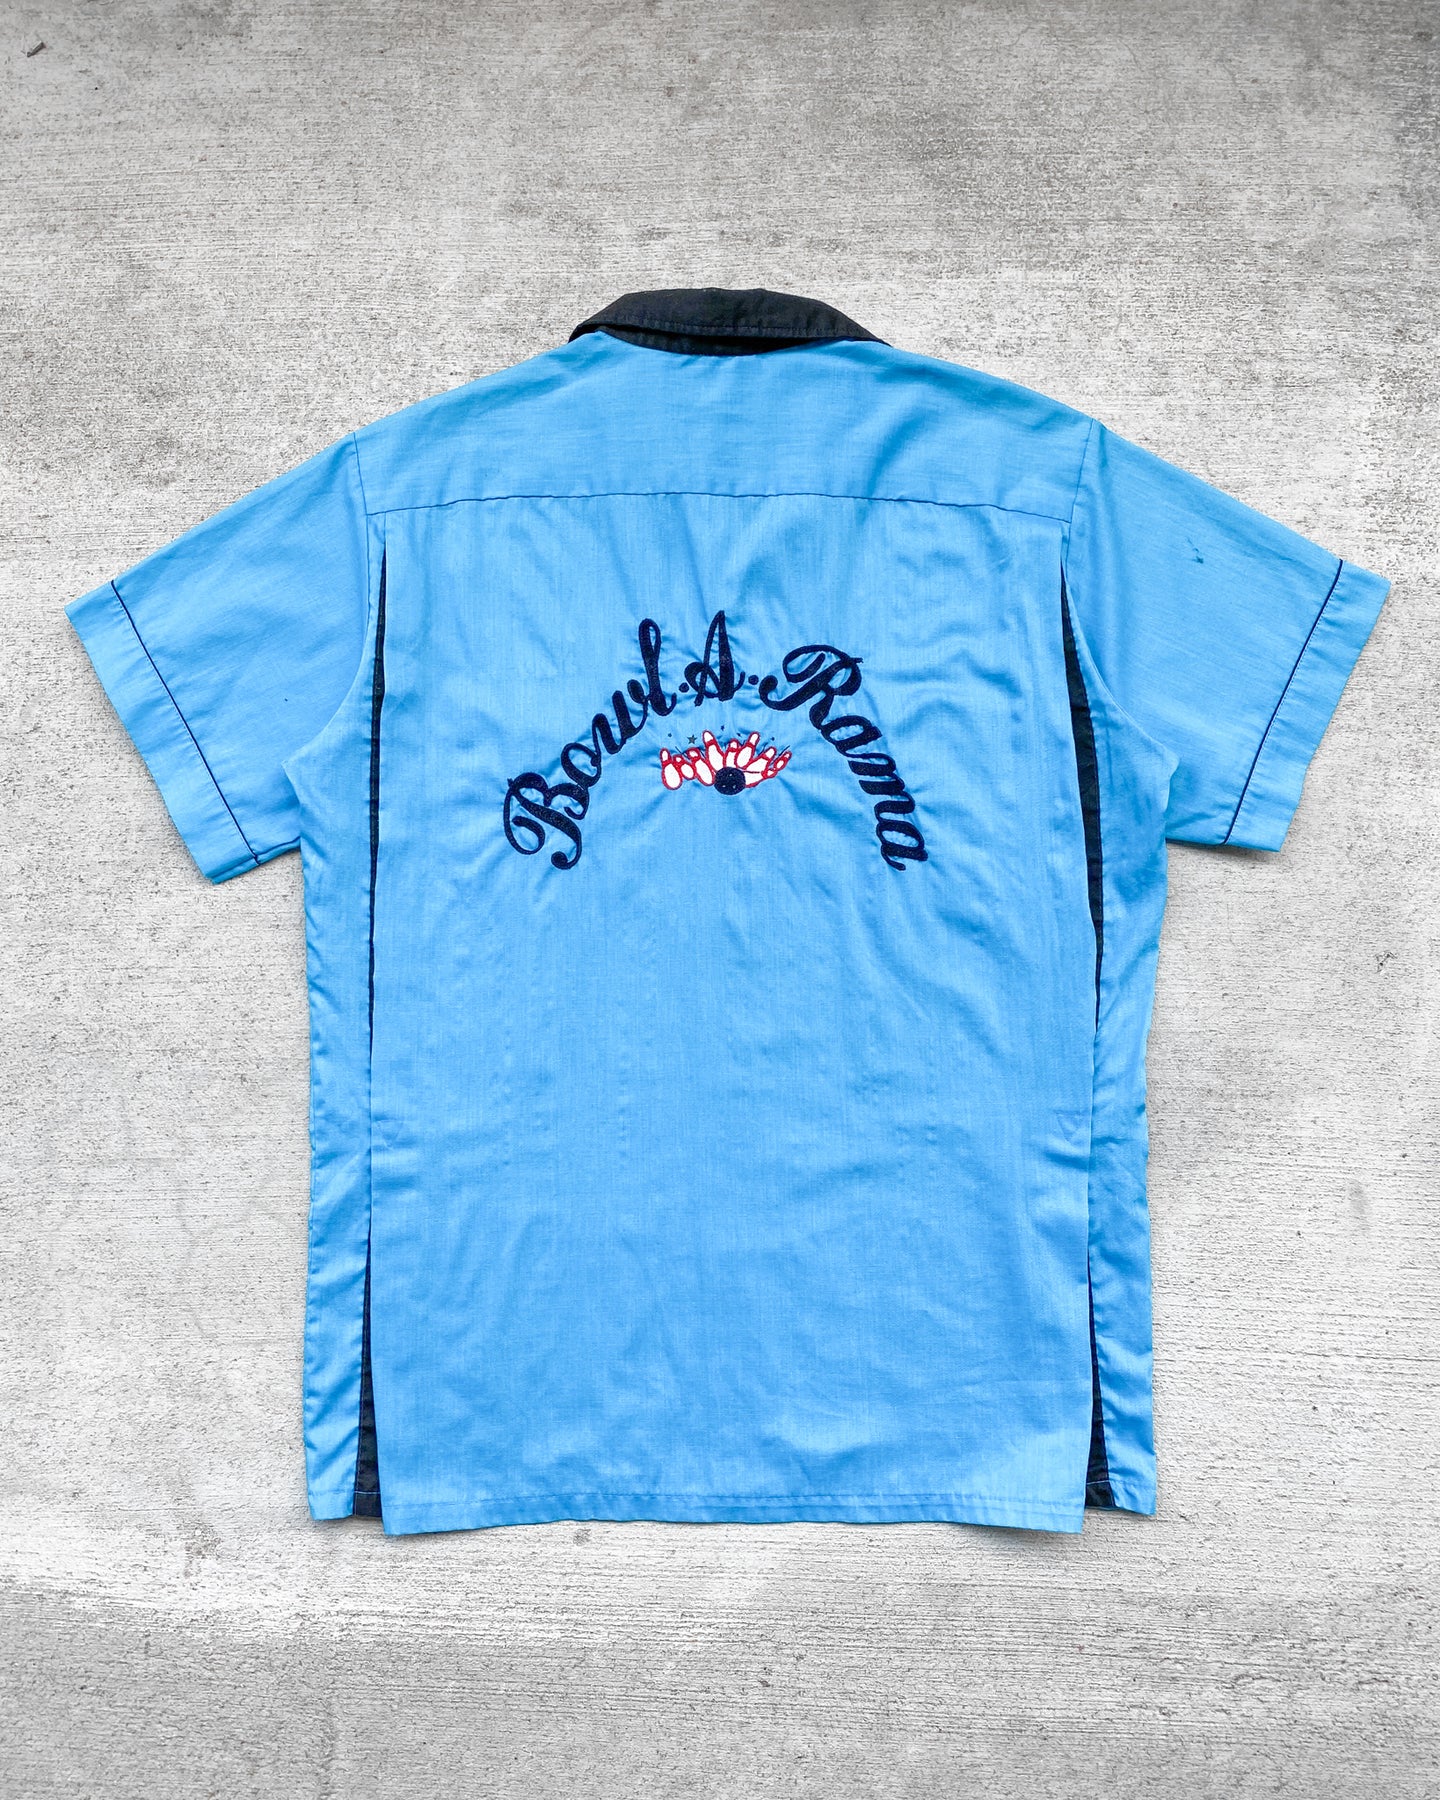 1970s Chainstitch Aqua Blue Bowling Shirt - Size Large